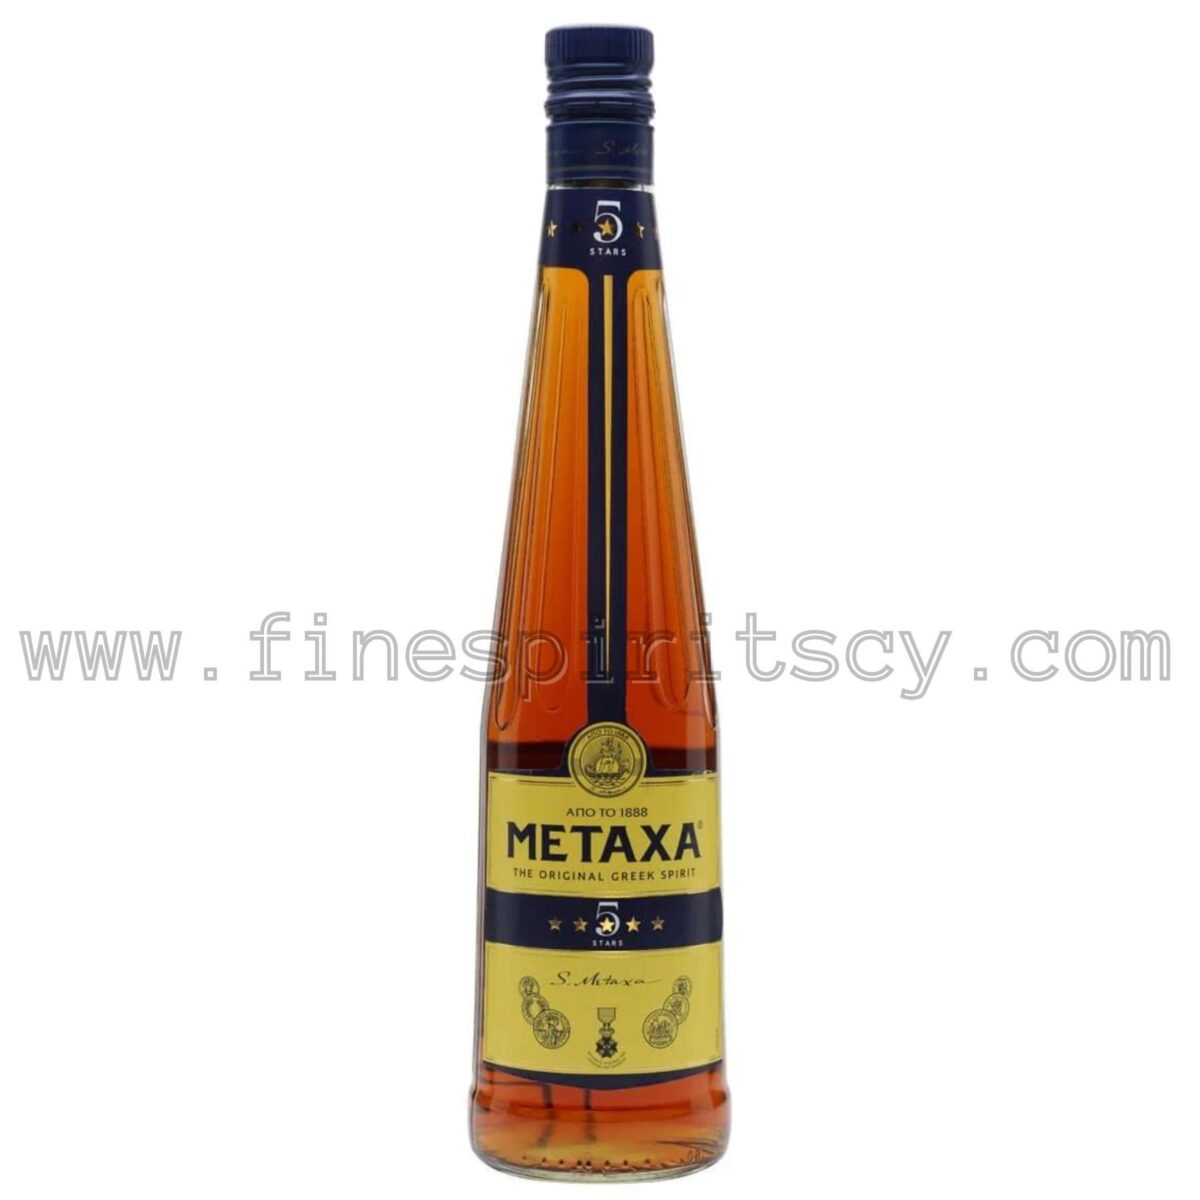 Metaxa 5 Stars Fine Spirits Cyprus 5* Brandy Cognac Order Online Price Cheap Best FSCY